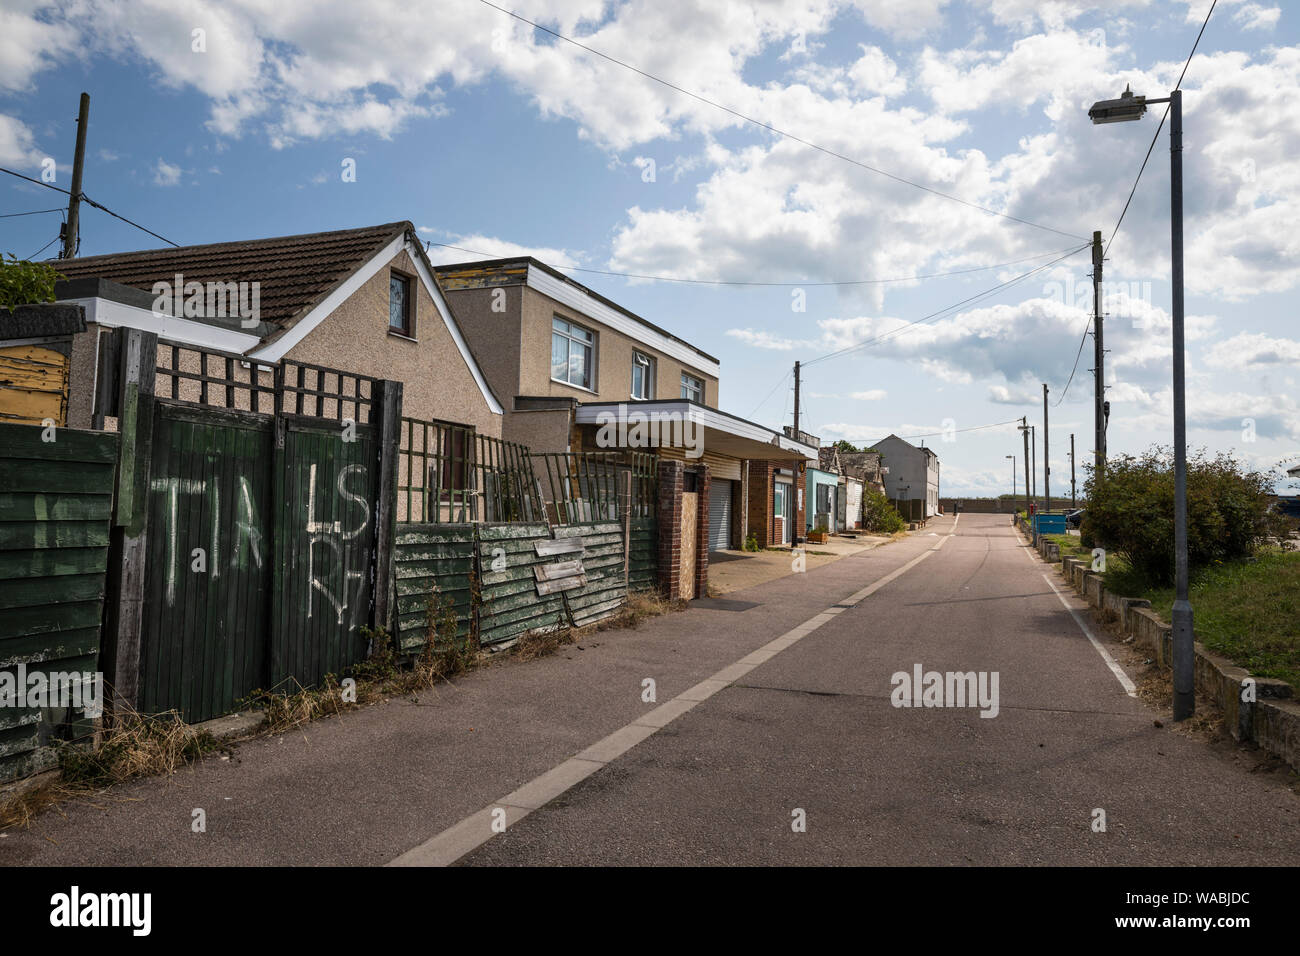 Street scene with derelict buildings, Jaywick, Essex, England, United Kingdom, Europe Stock Photo